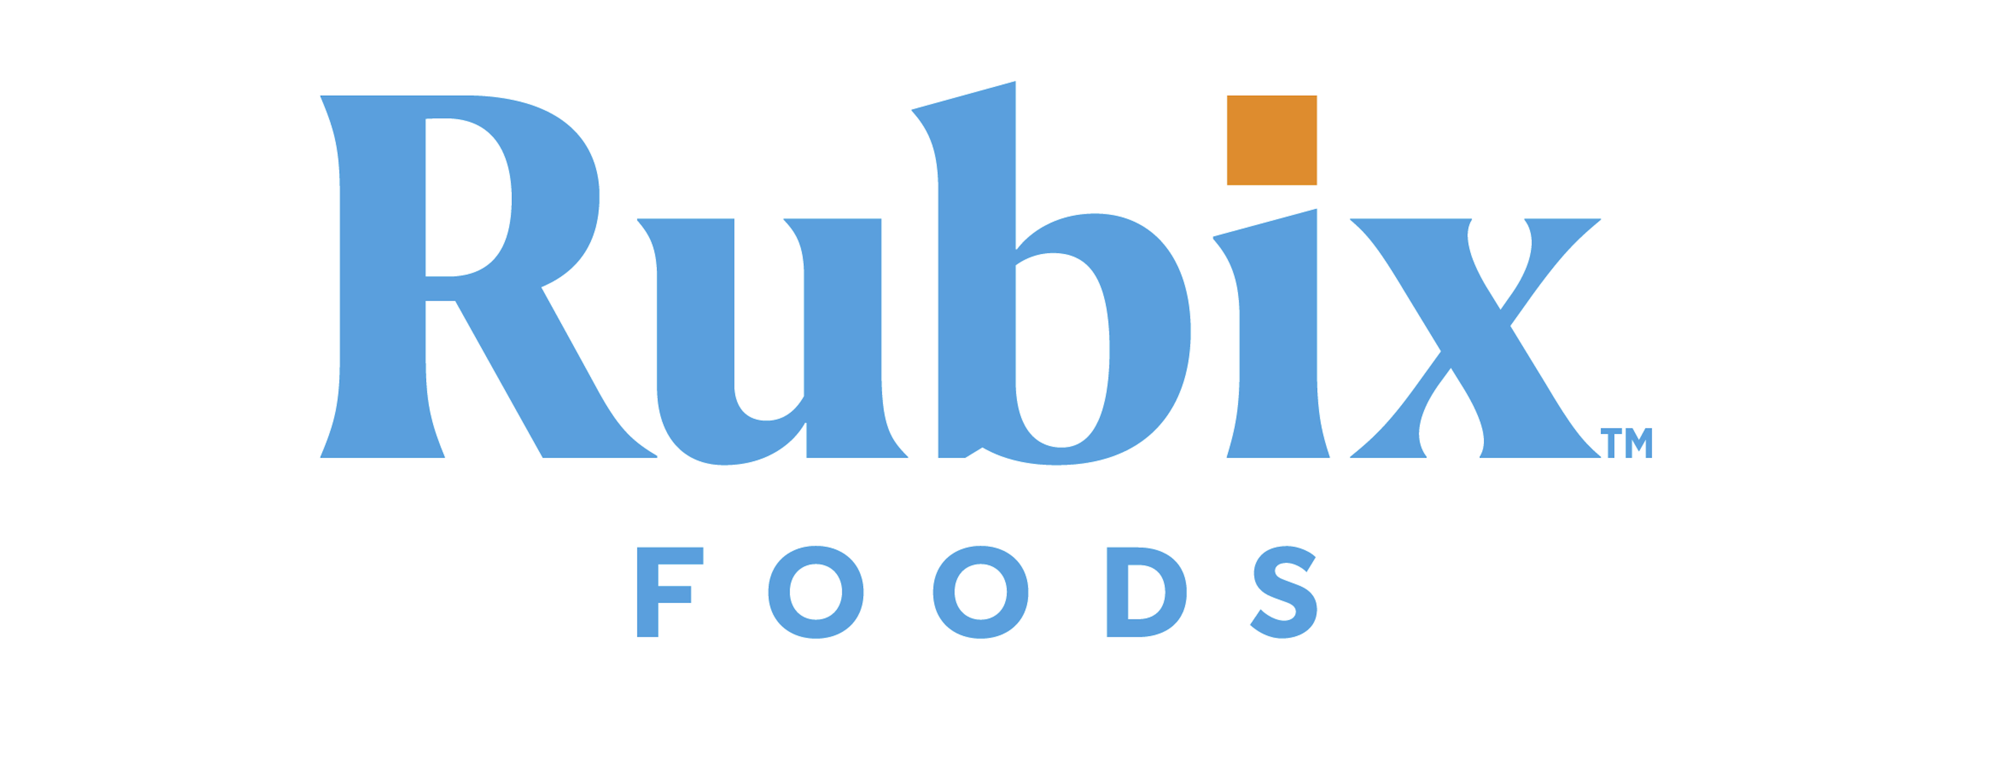 The new Rubix Foods logo.